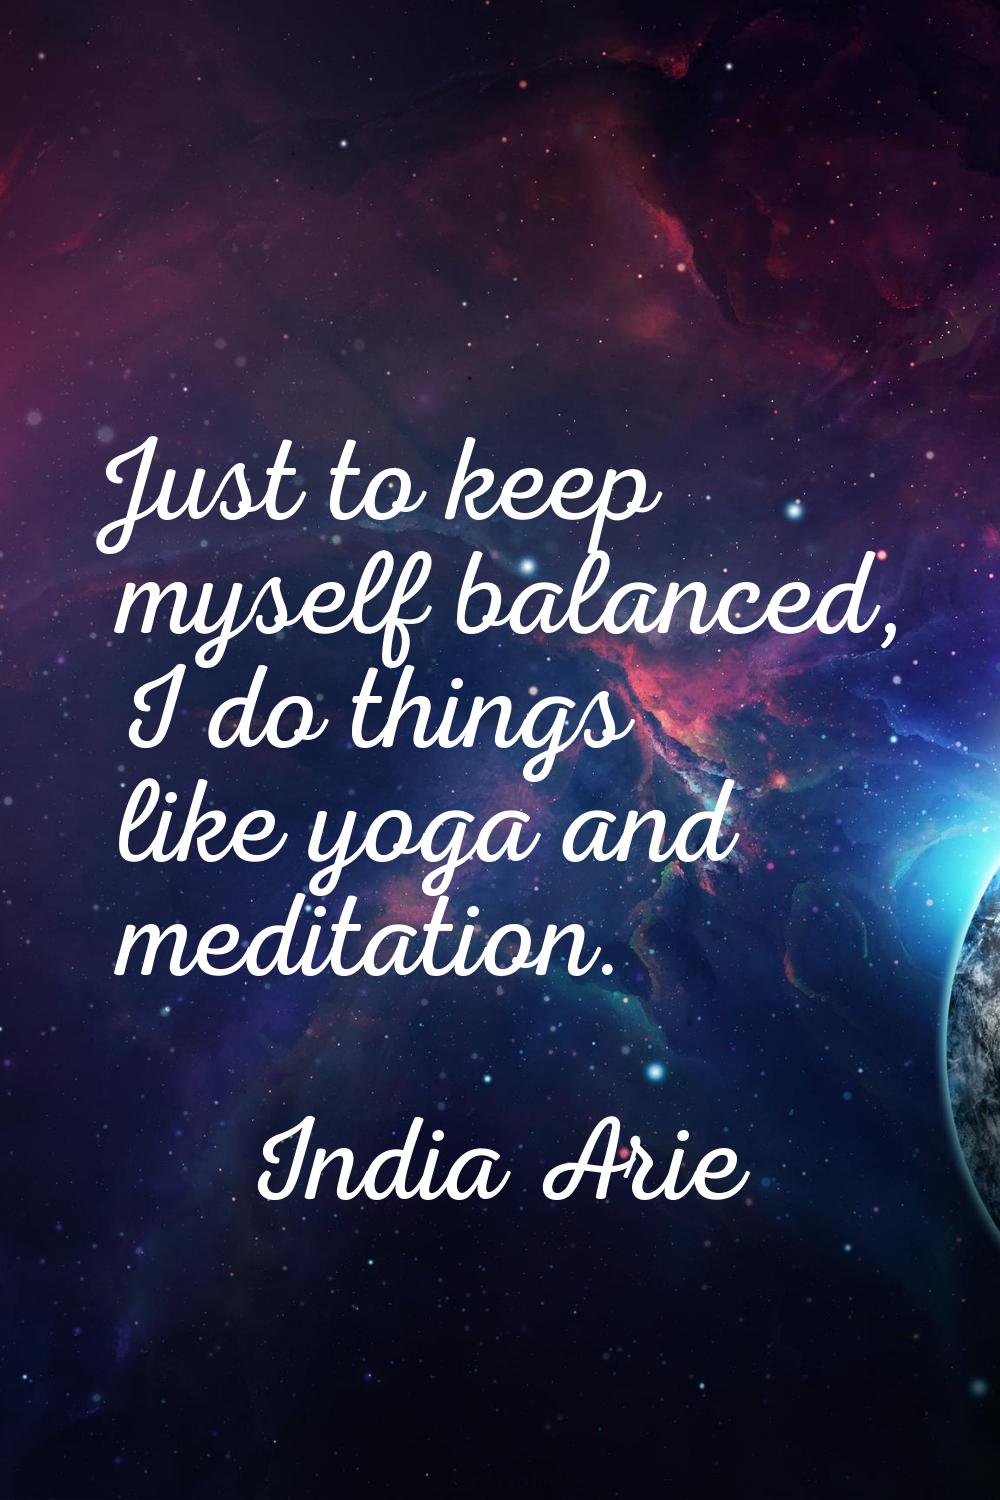 Just to keep myself balanced, I do things like yoga and meditation.